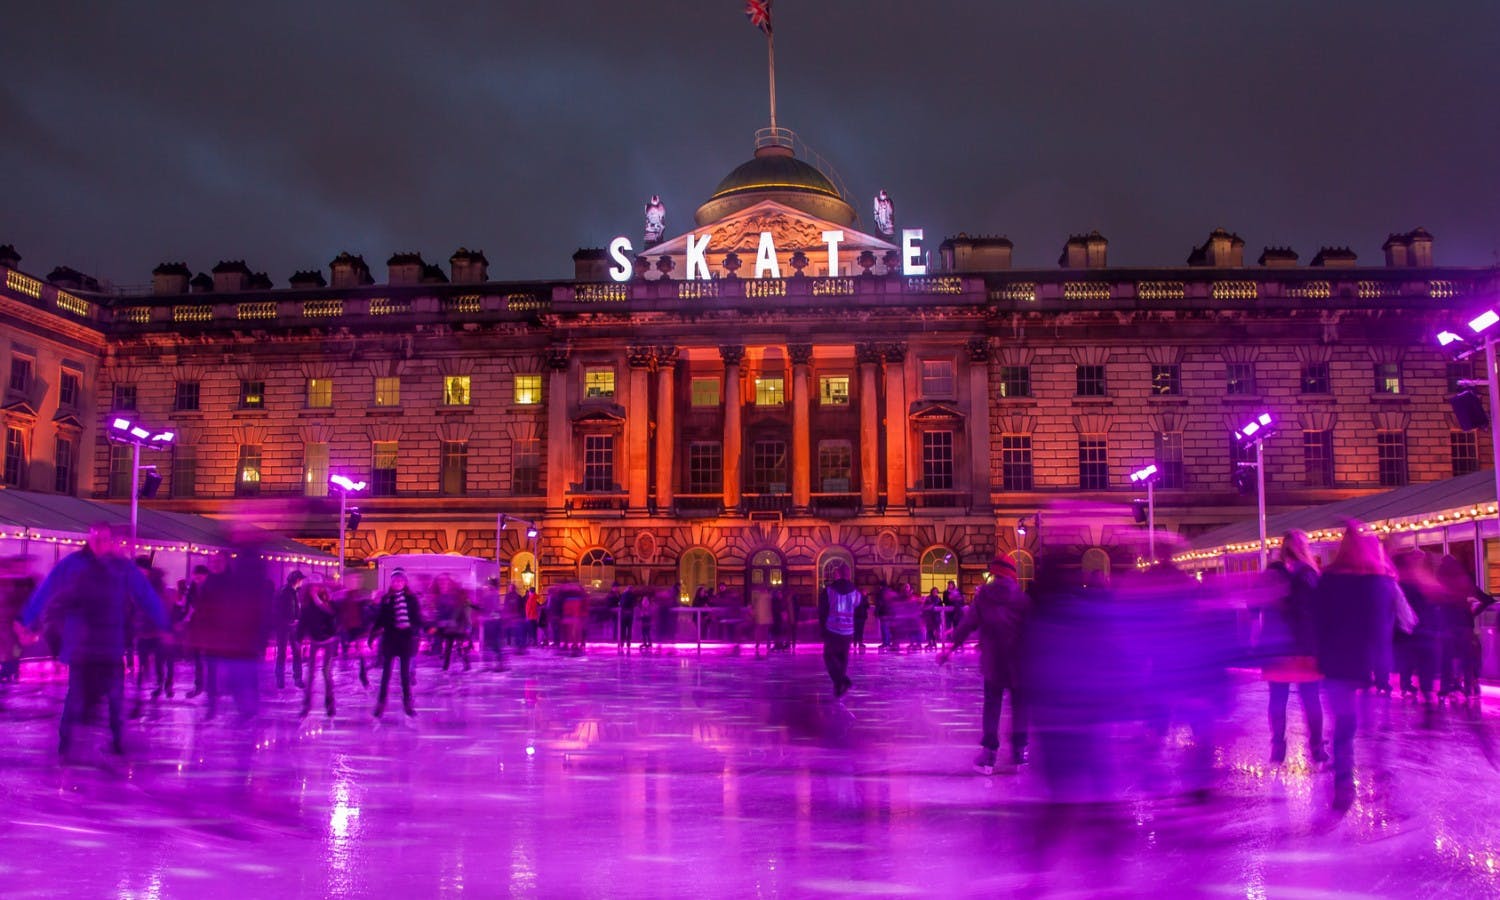 Somerset House ice skating